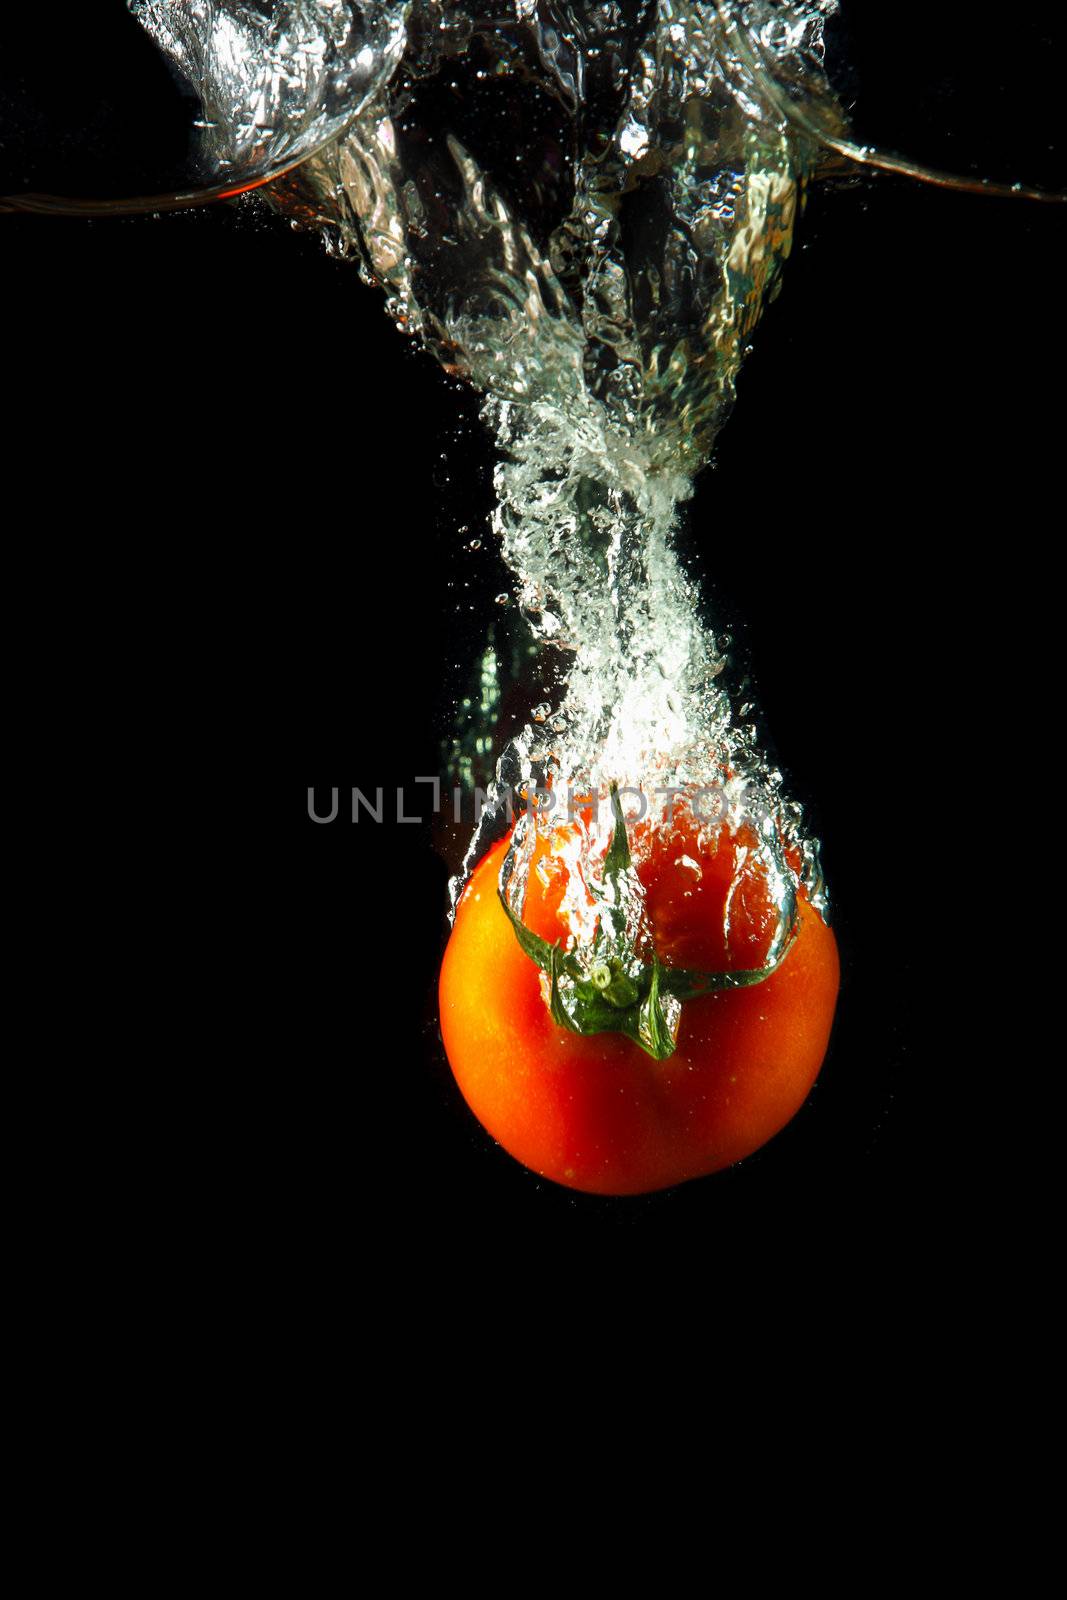 fresh tomato under water by sergey_nivens